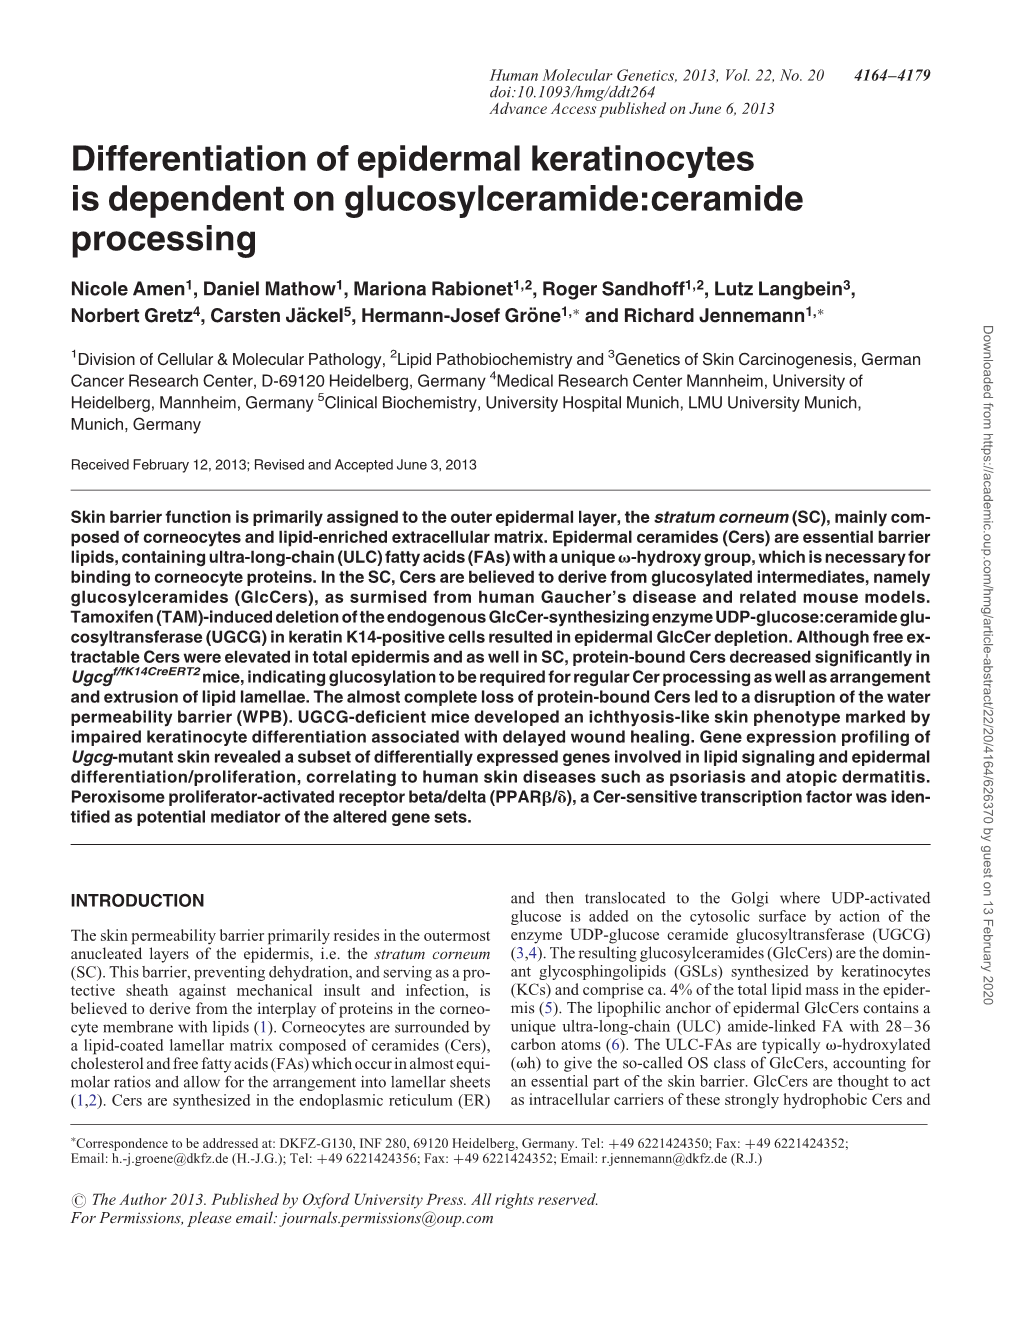 Differentiation of Epidermal Keratinocytes Is Dependent on Glucosylceramide:Ceramide Processing